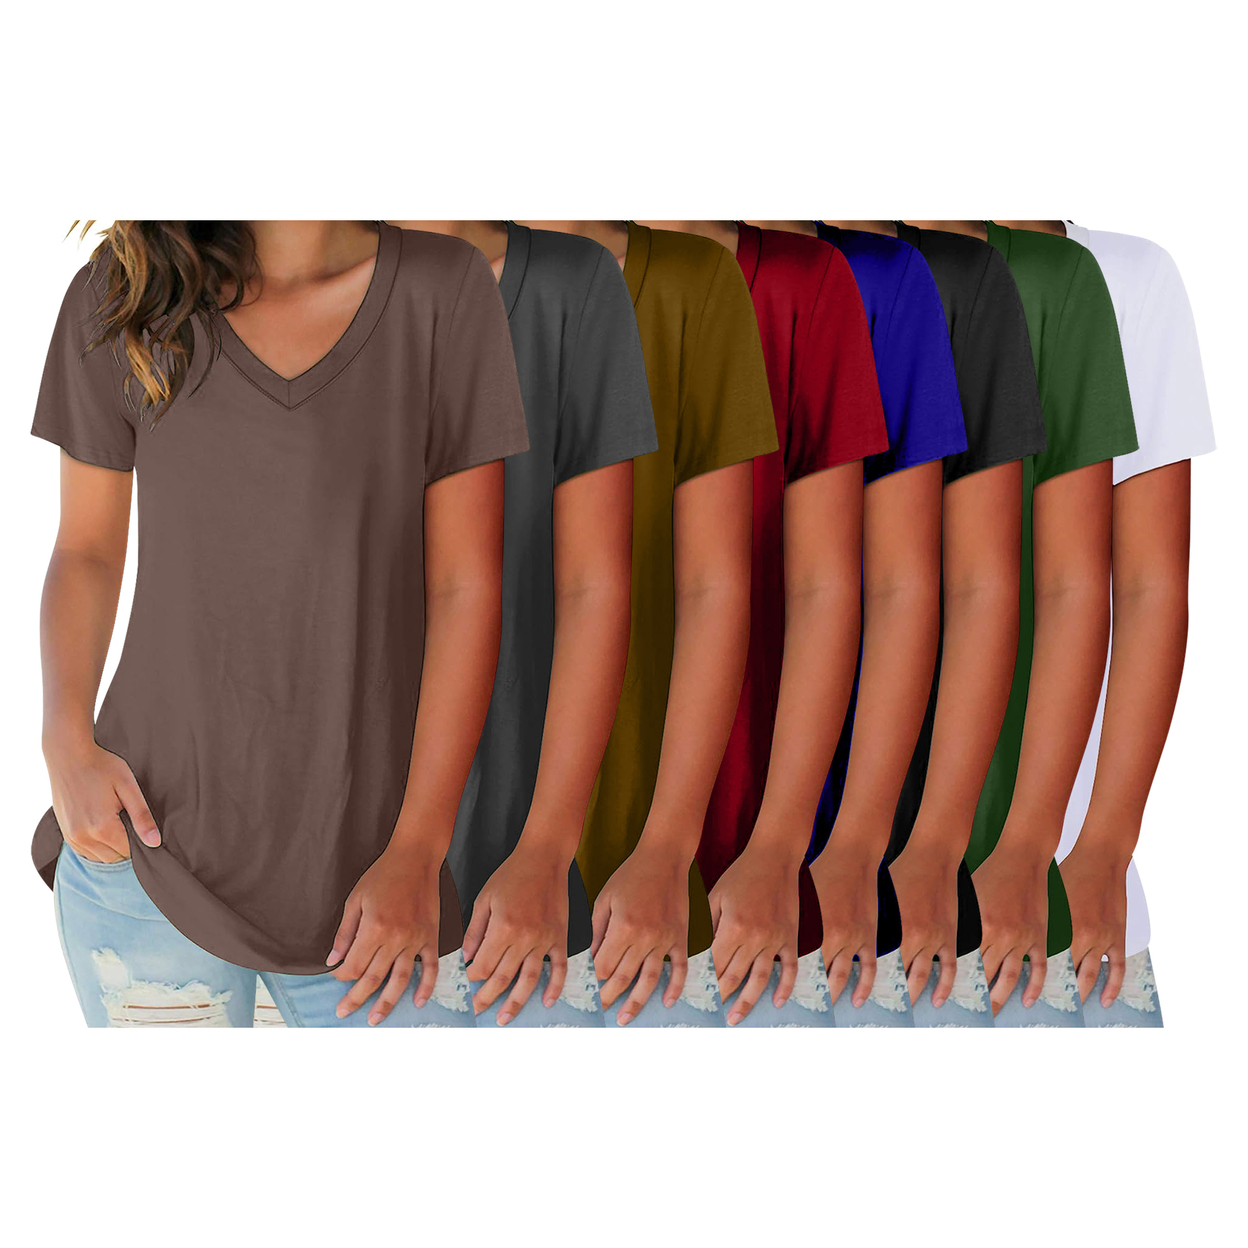 2-Pack: Women's Ultra Soft Smooth Cotton Blend Basic V-Neck Short Sleeve Shirts - Black & Navy, Medium